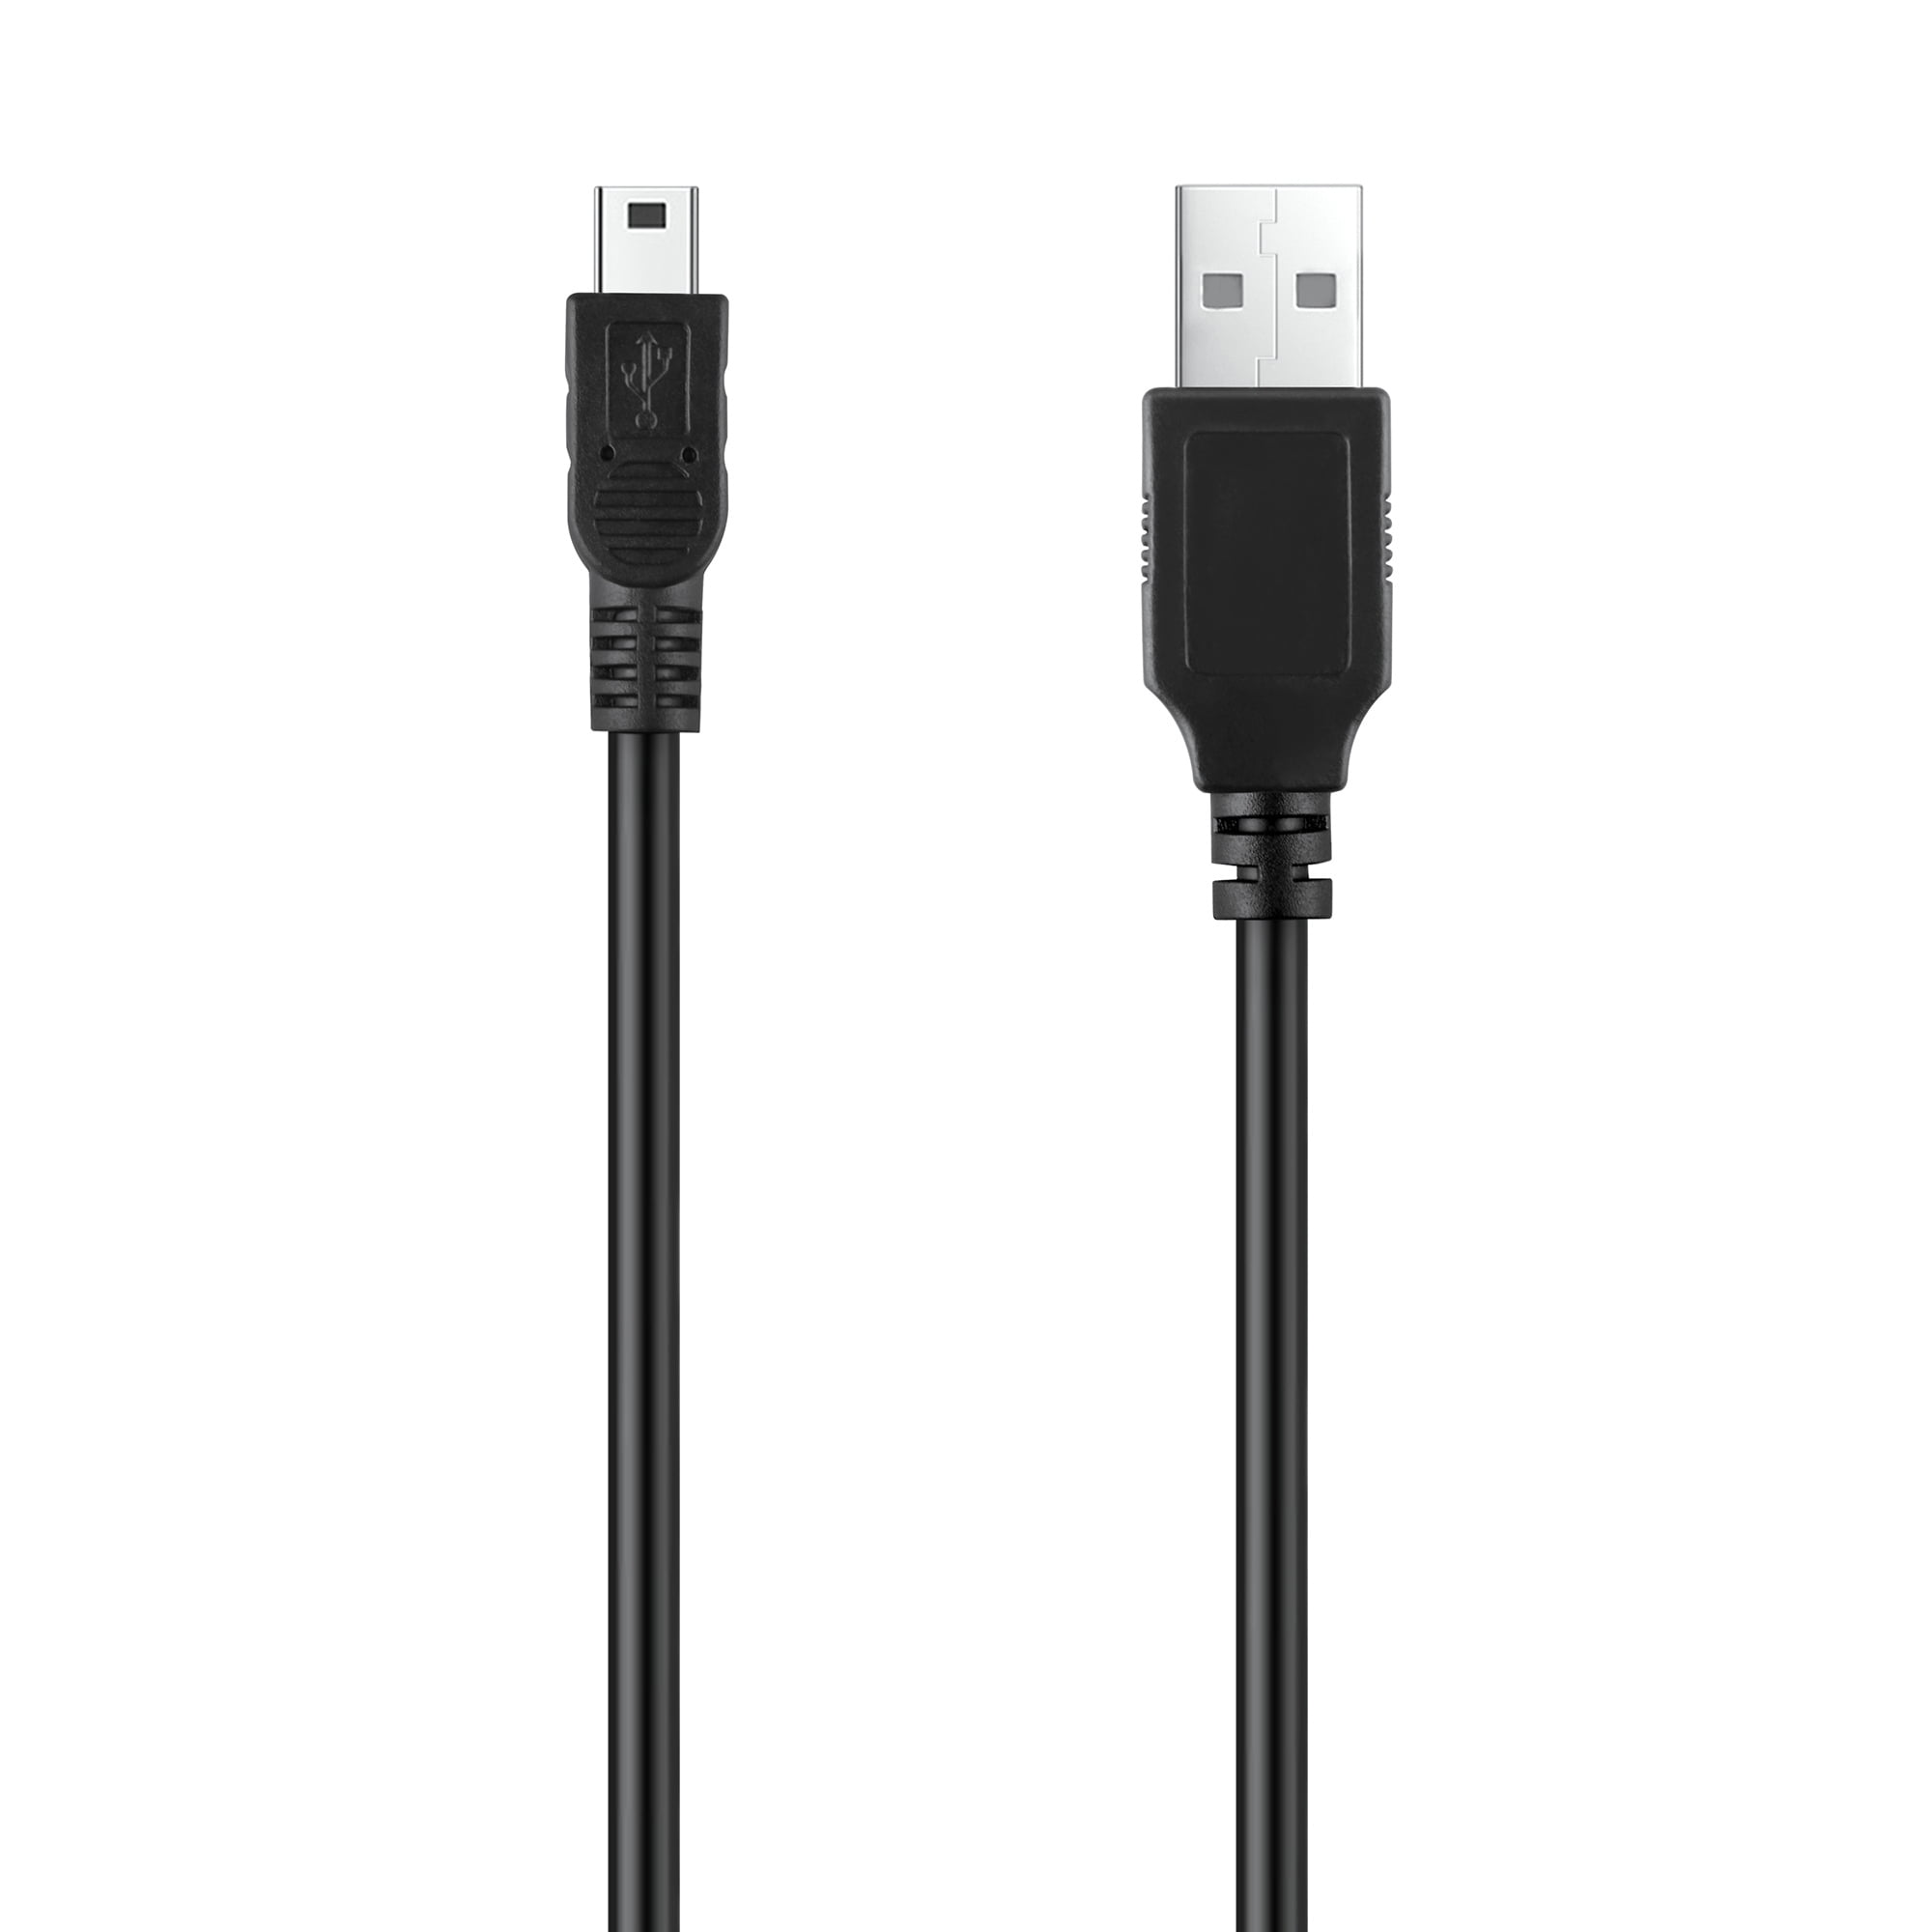 Vani USB Cord Cable for Panasonic PV-GS85 PV-GS120 PV-GS150 PV-GS180 PV-GS200 